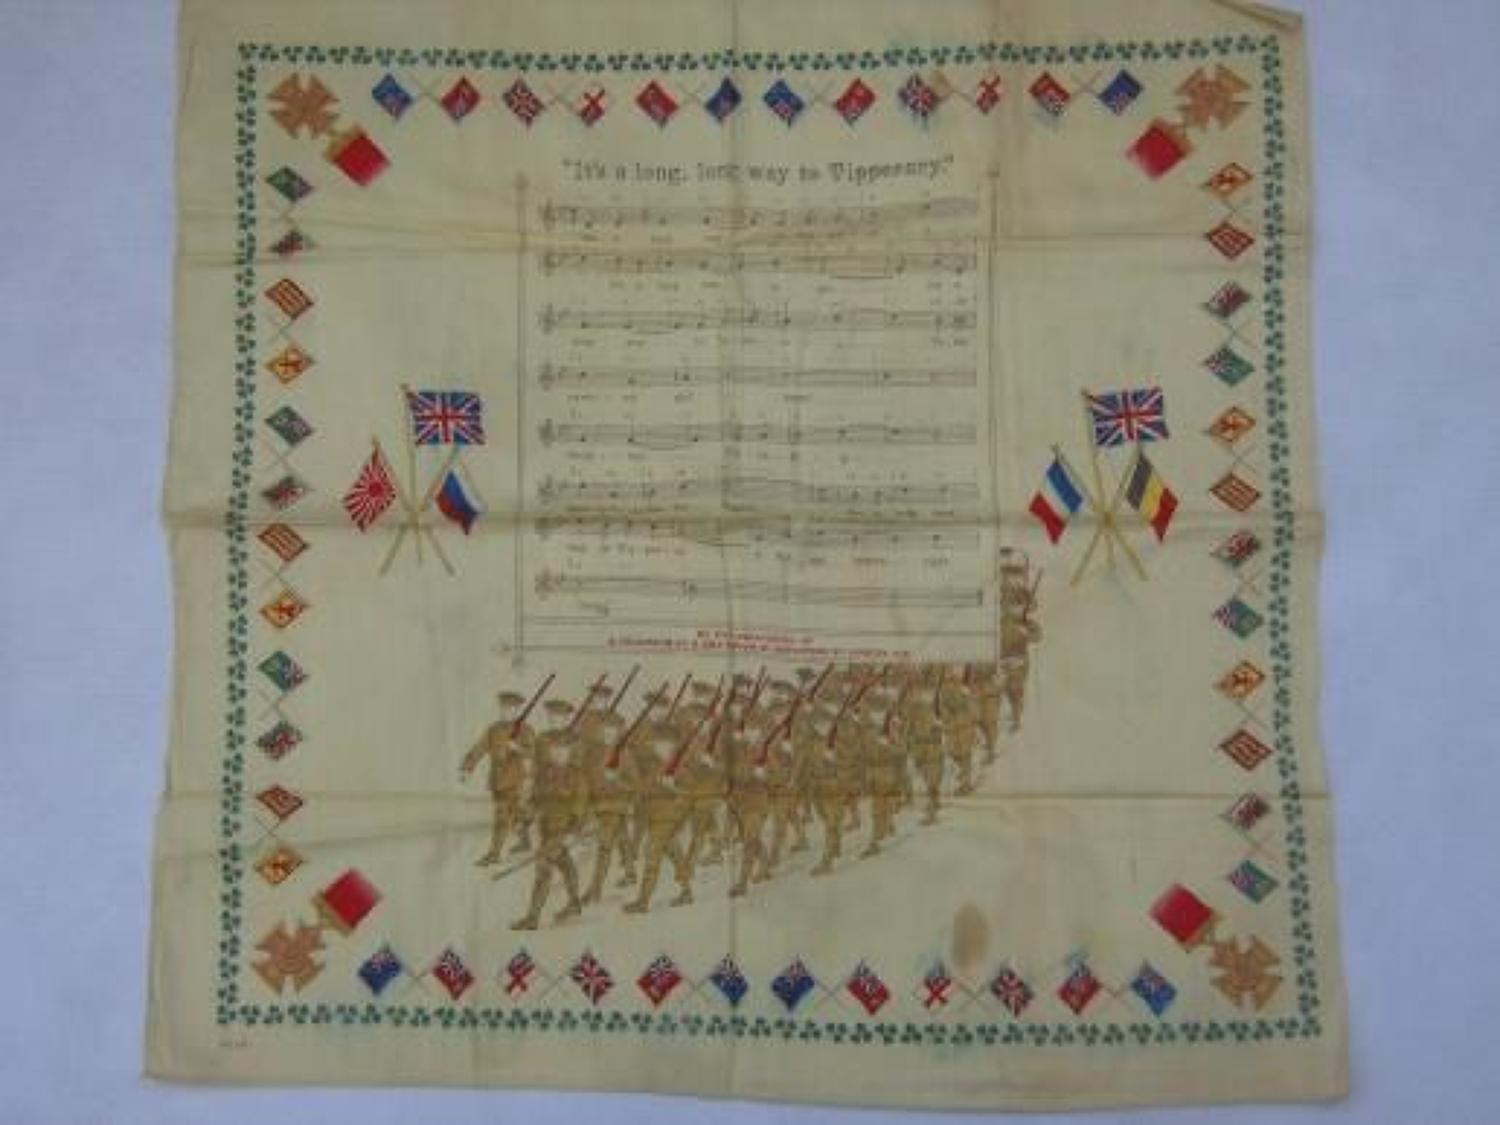 WW1 printed cotton souvenir handkerchief: Tipperary